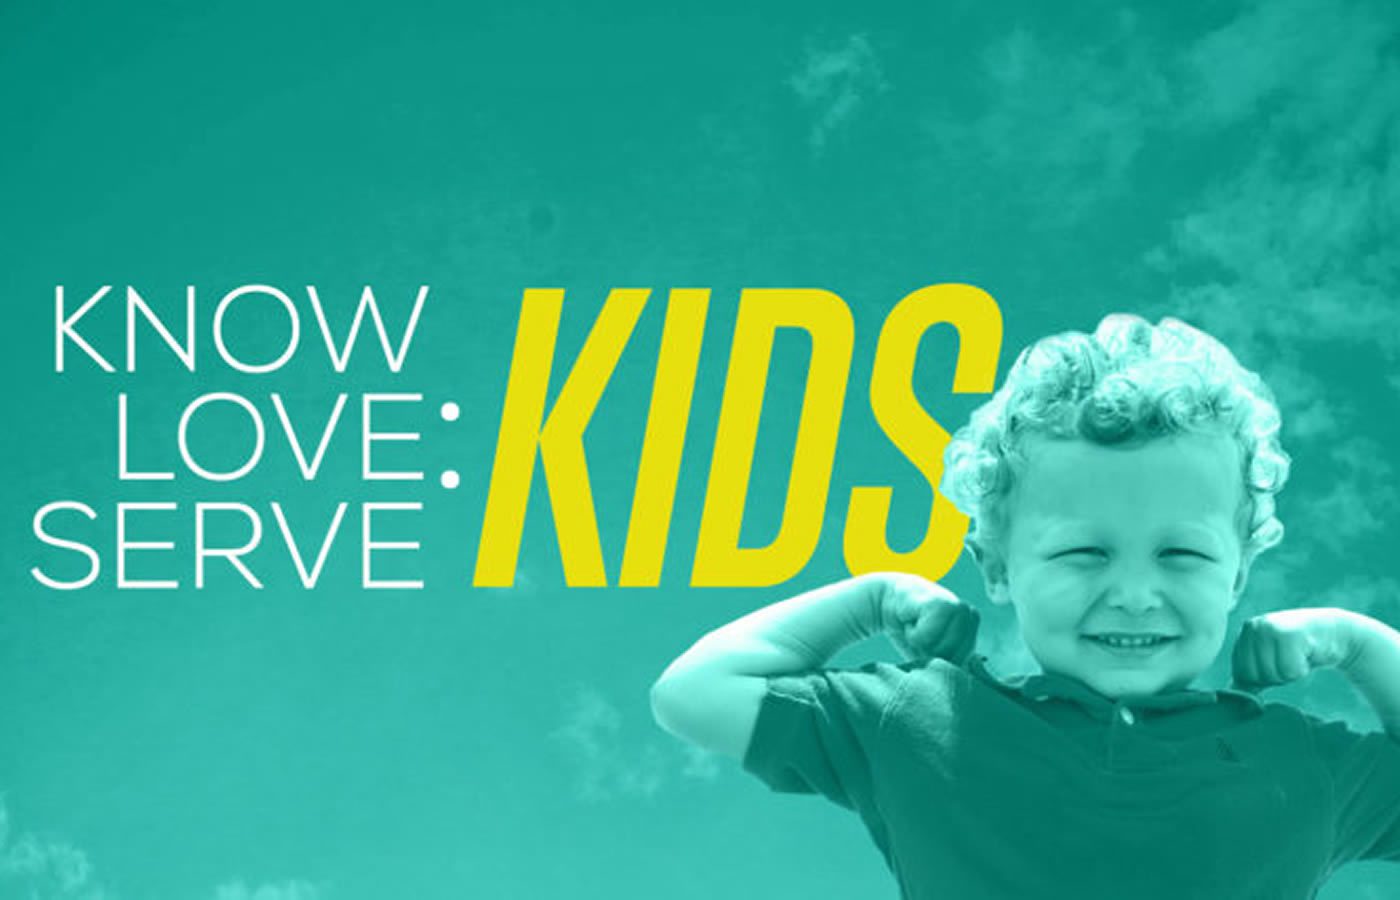 Know, Love, Serve … Kids (Part 2 of 5)